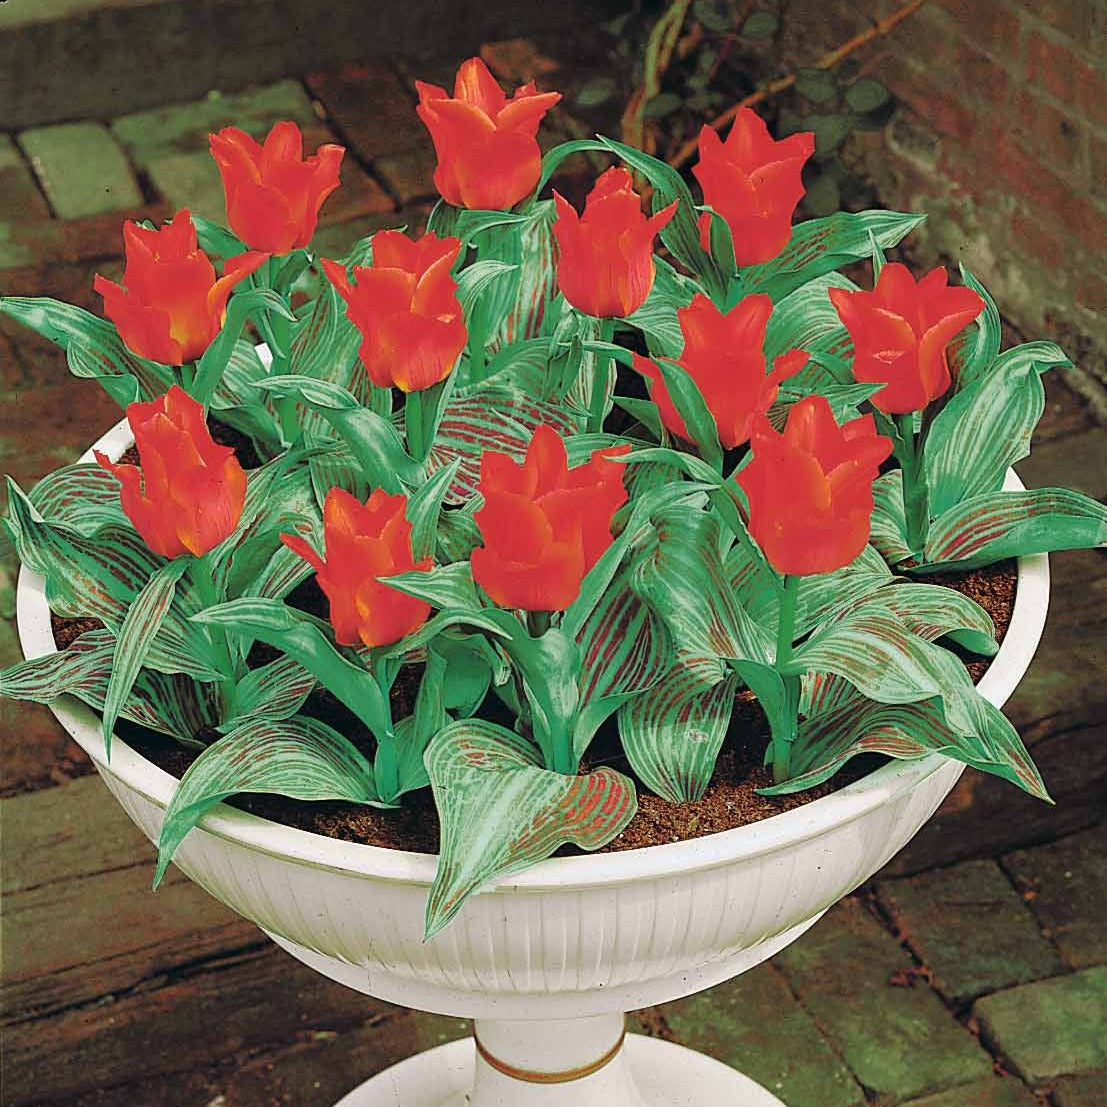 Tulipe Chaperon Rouge - Tulipa greigii chaperon rouge - Tulipe